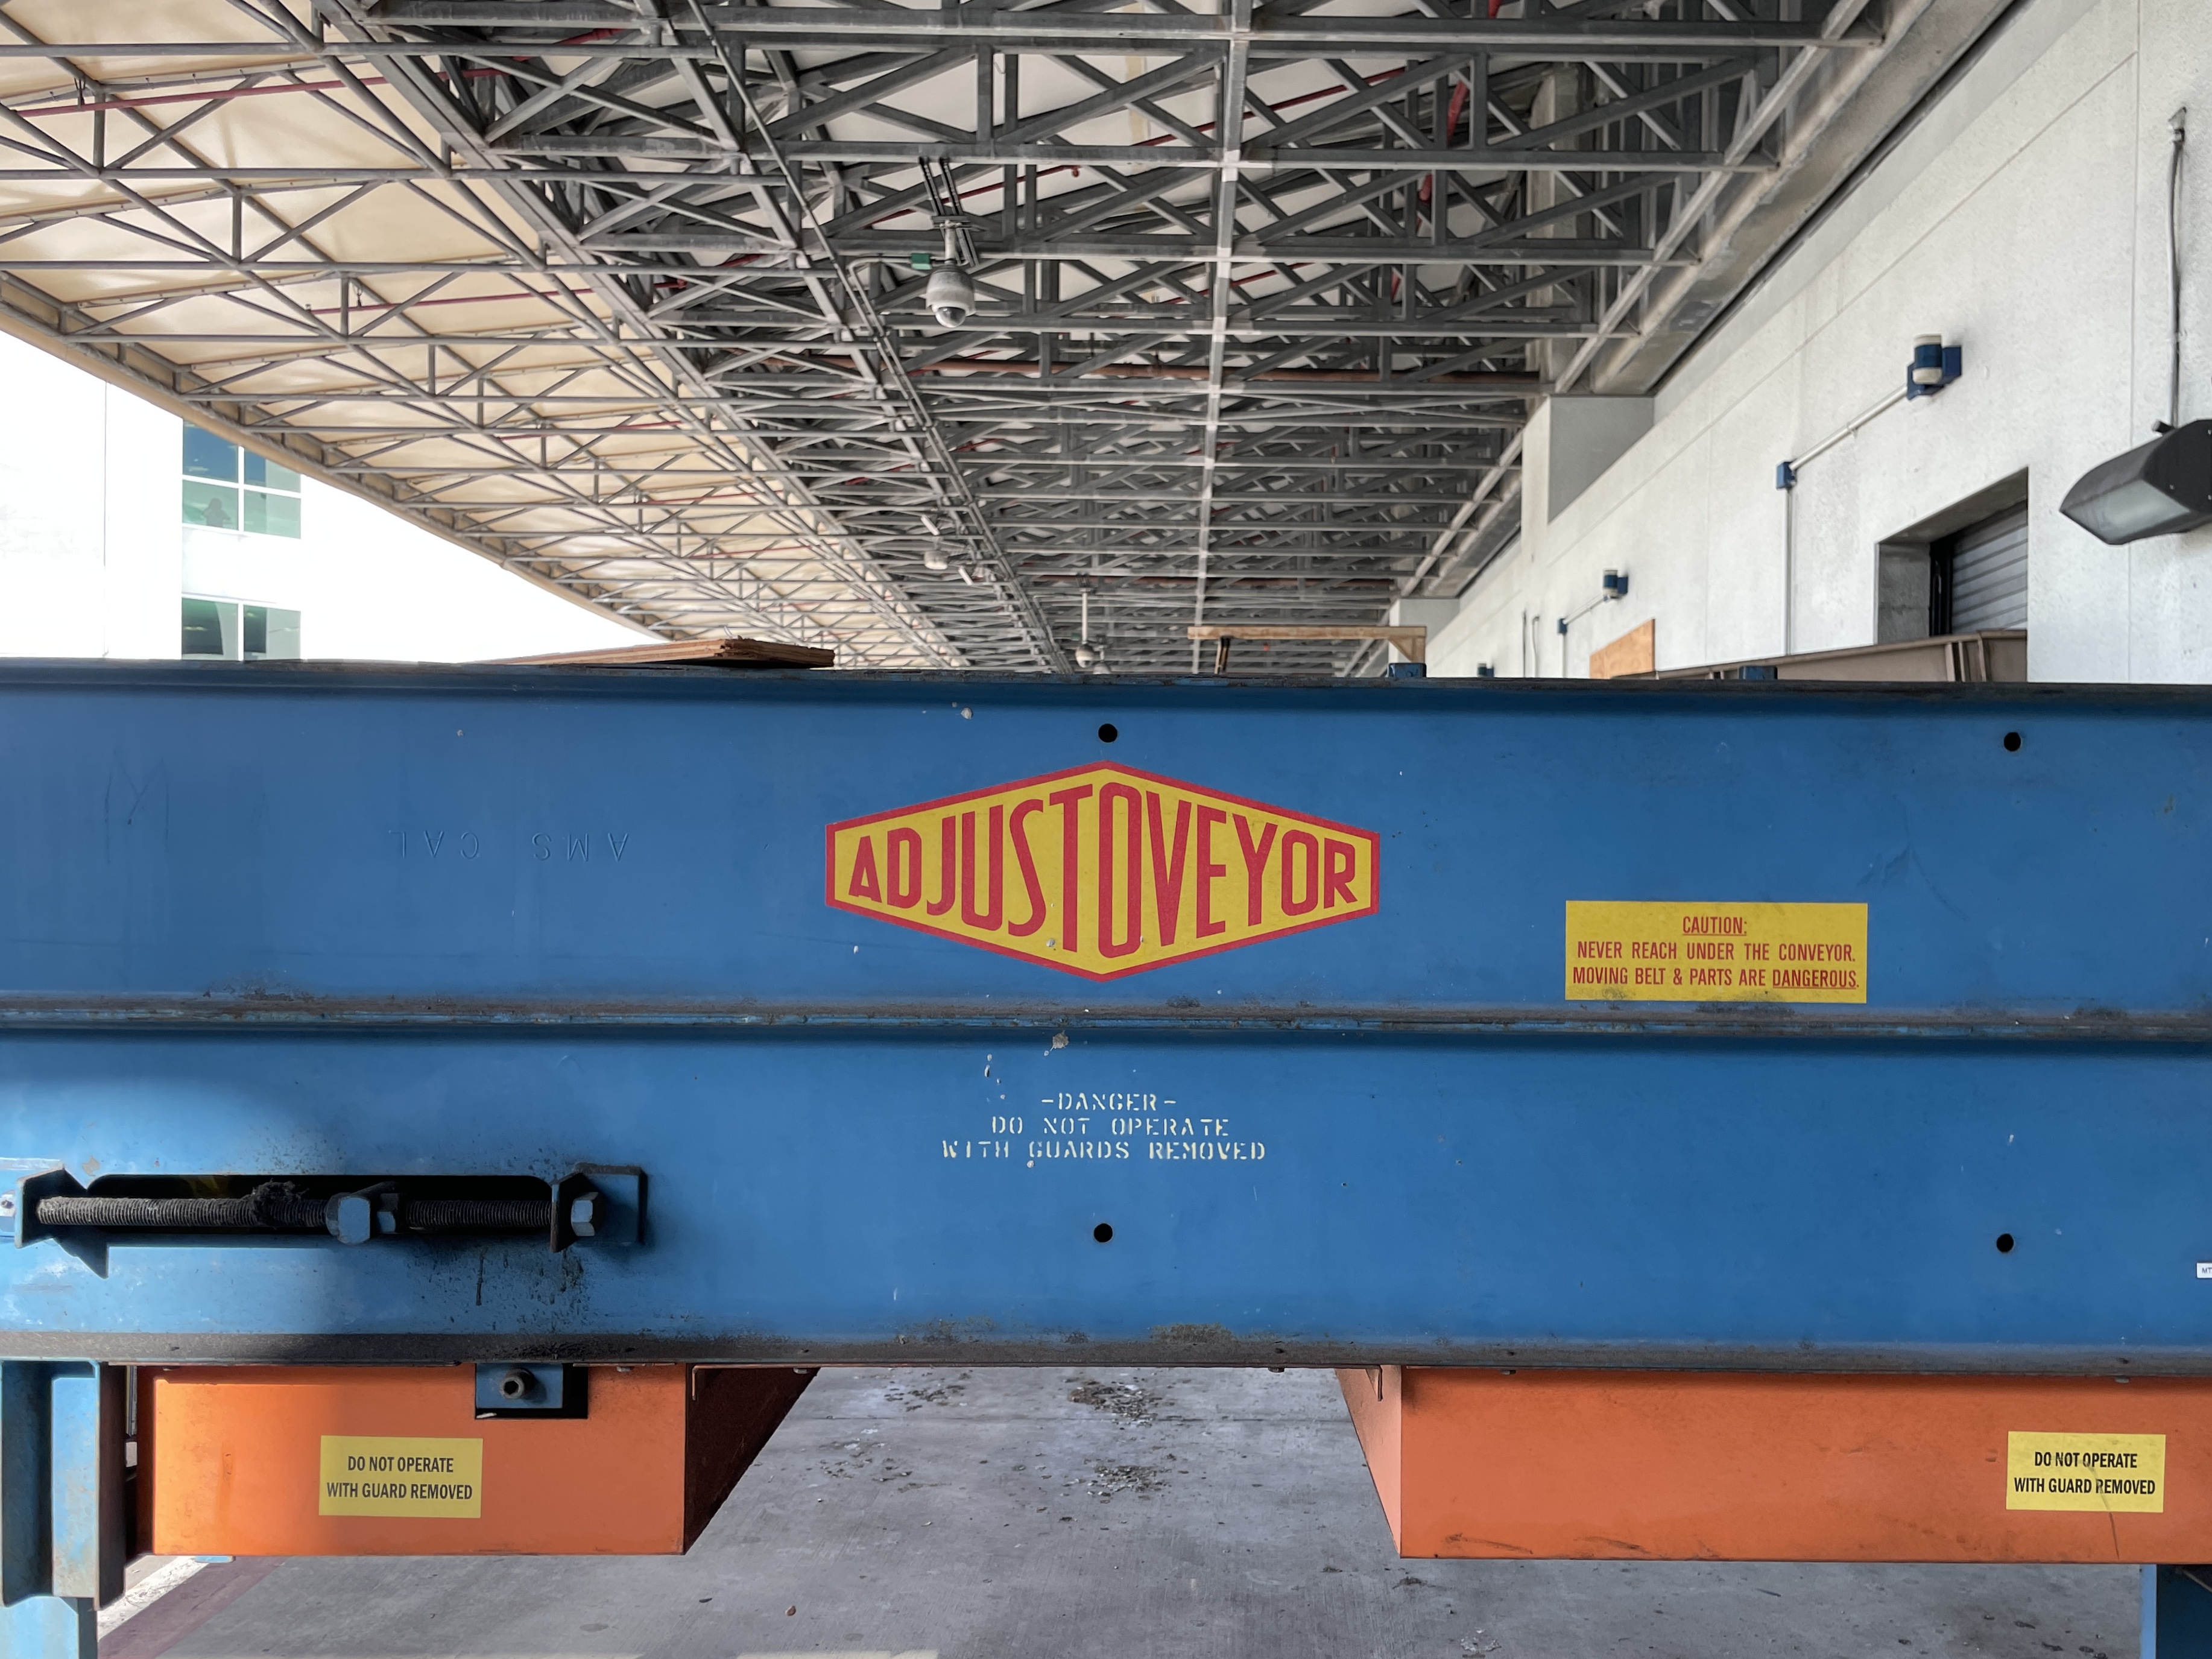 An Adjustoveyor conveyor belt machine outside of Miami International Airport.